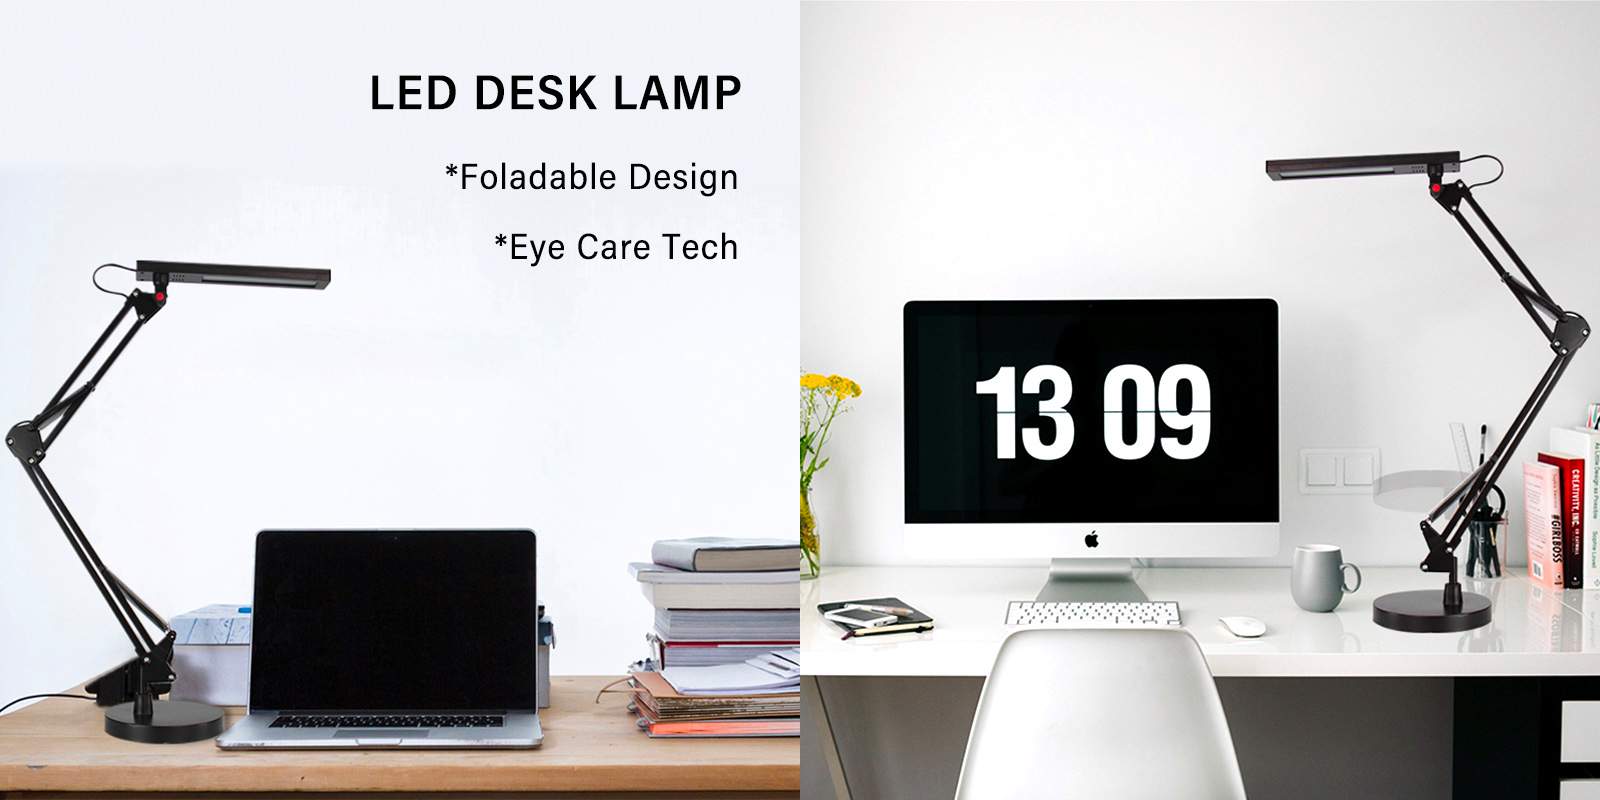 Arm adjustable desk lamps